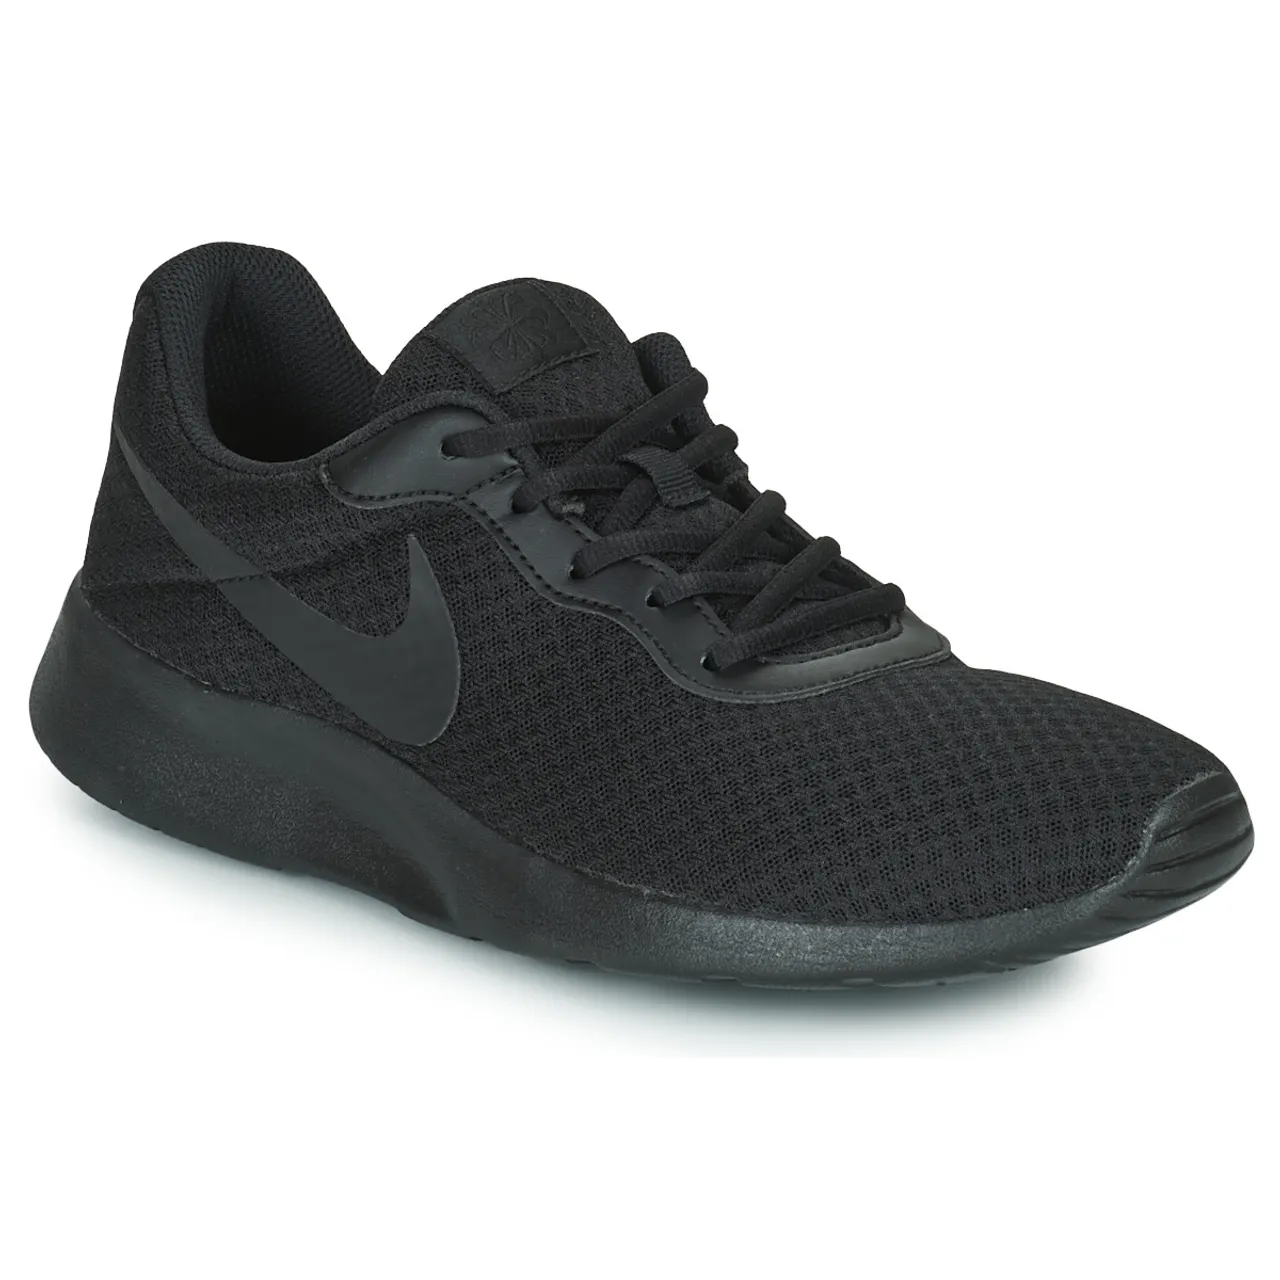 Nike  NIKE TANJUN  men's Shoes (Trainers) in Black